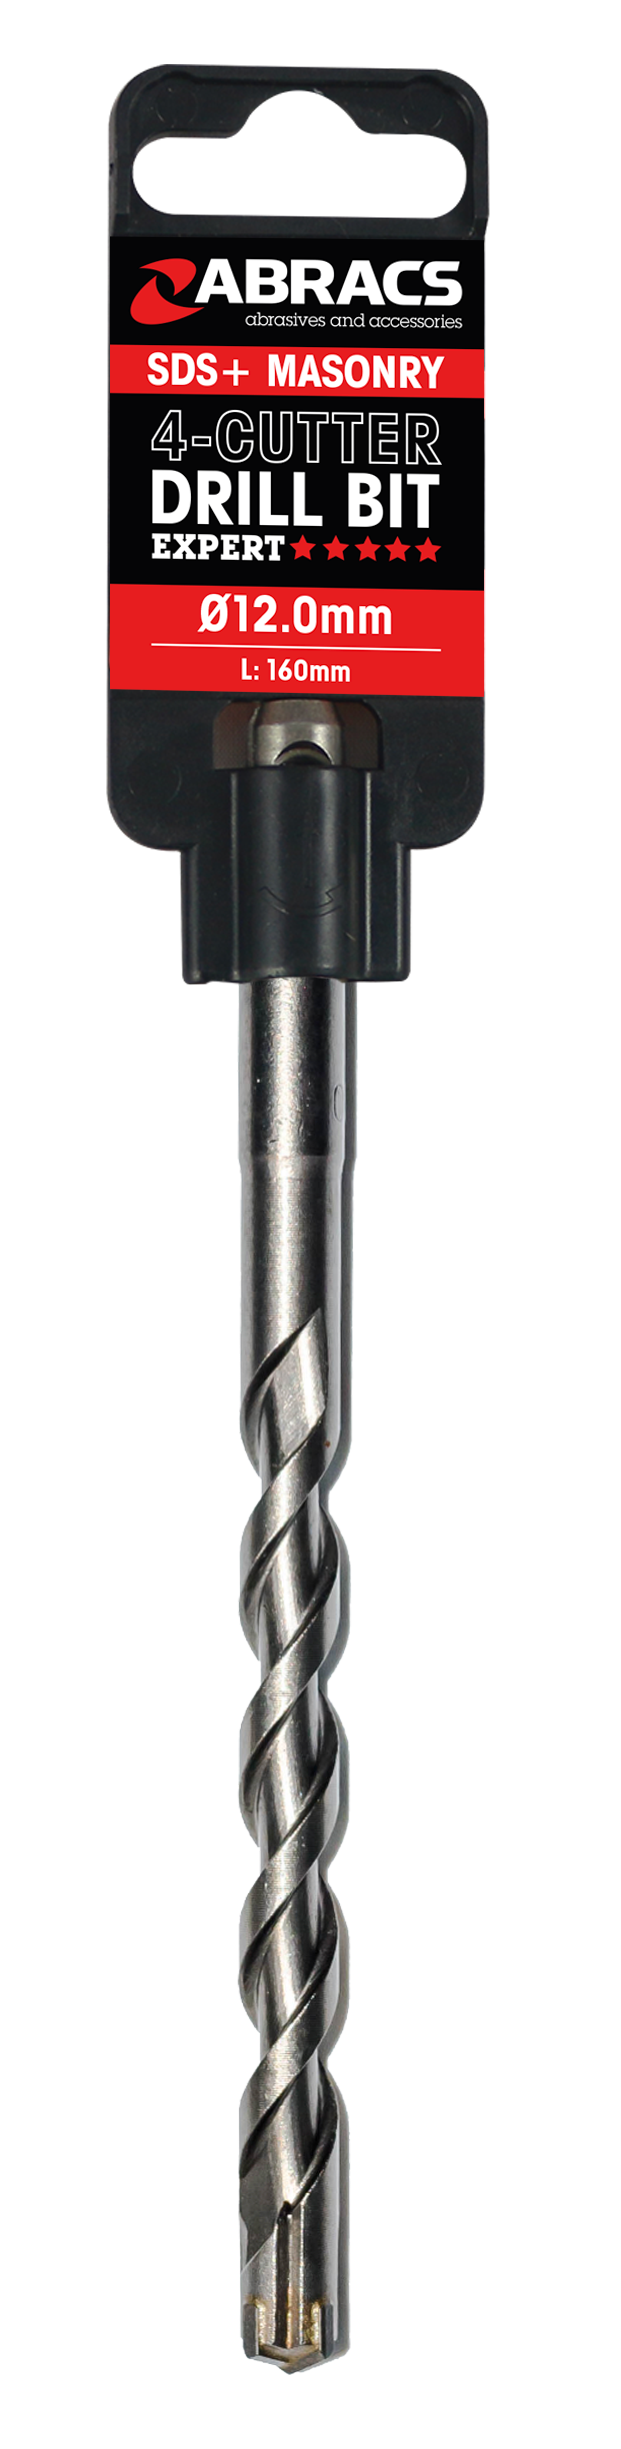 DBCX120310 12.0mm x 310mm SDS+ Masonry Drill Bit - 4 Cutter